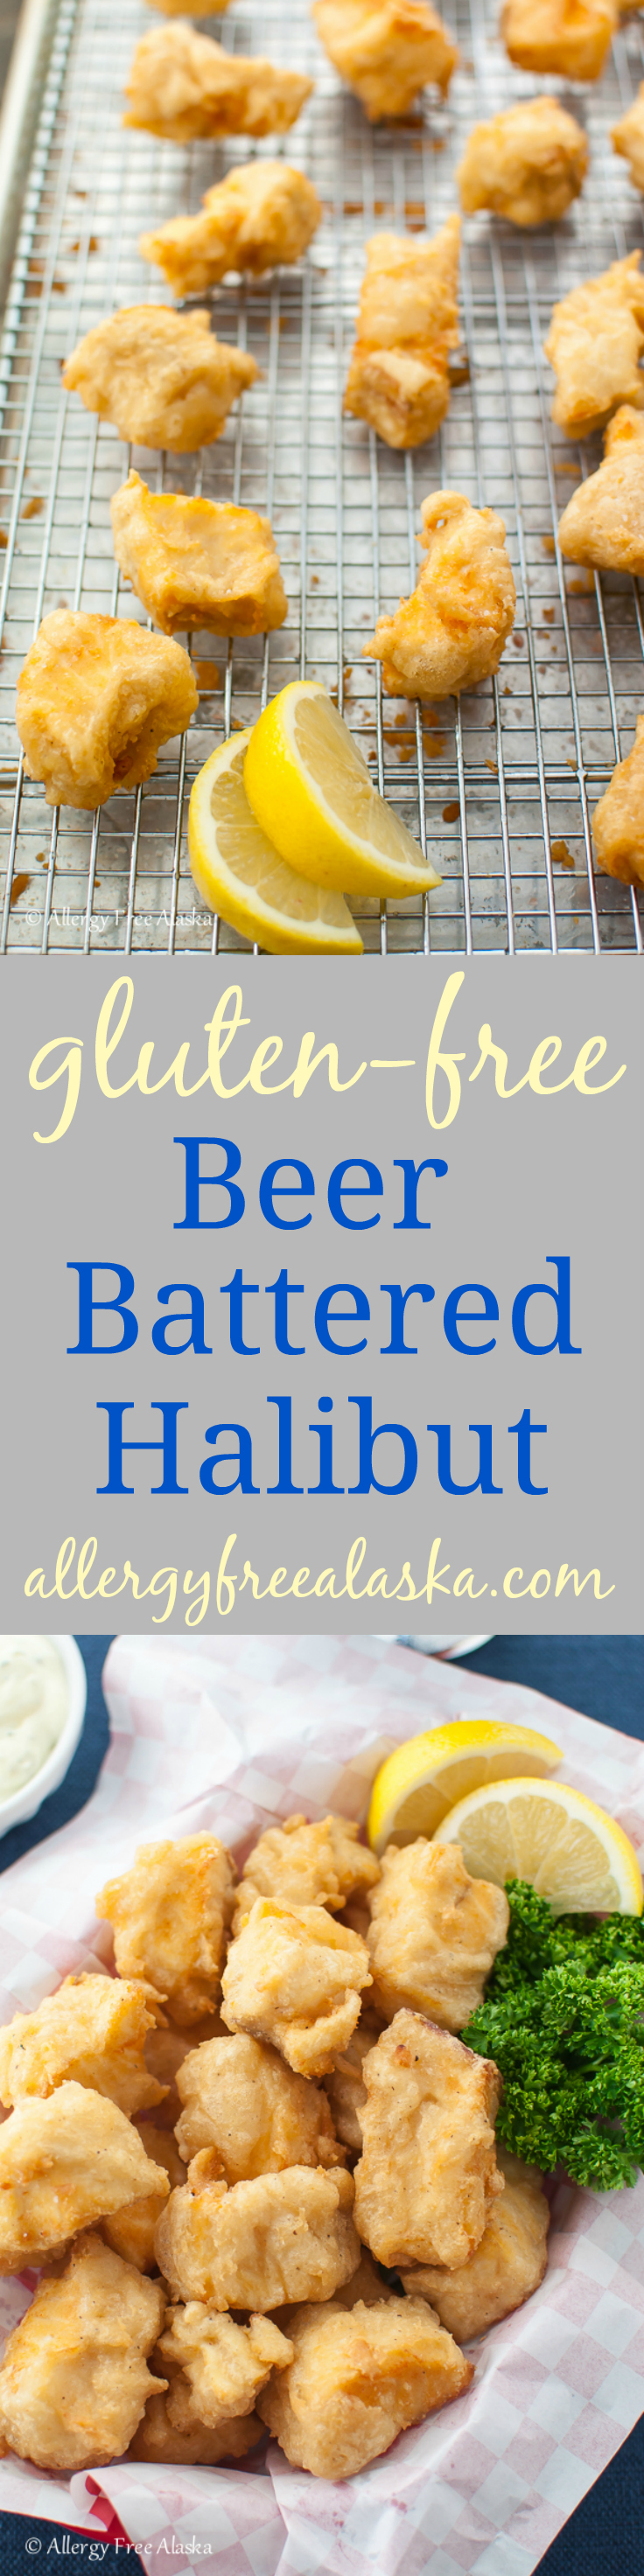 Gluten-Free Beer Battered Halibut Recipe from Allergy Free Alaska